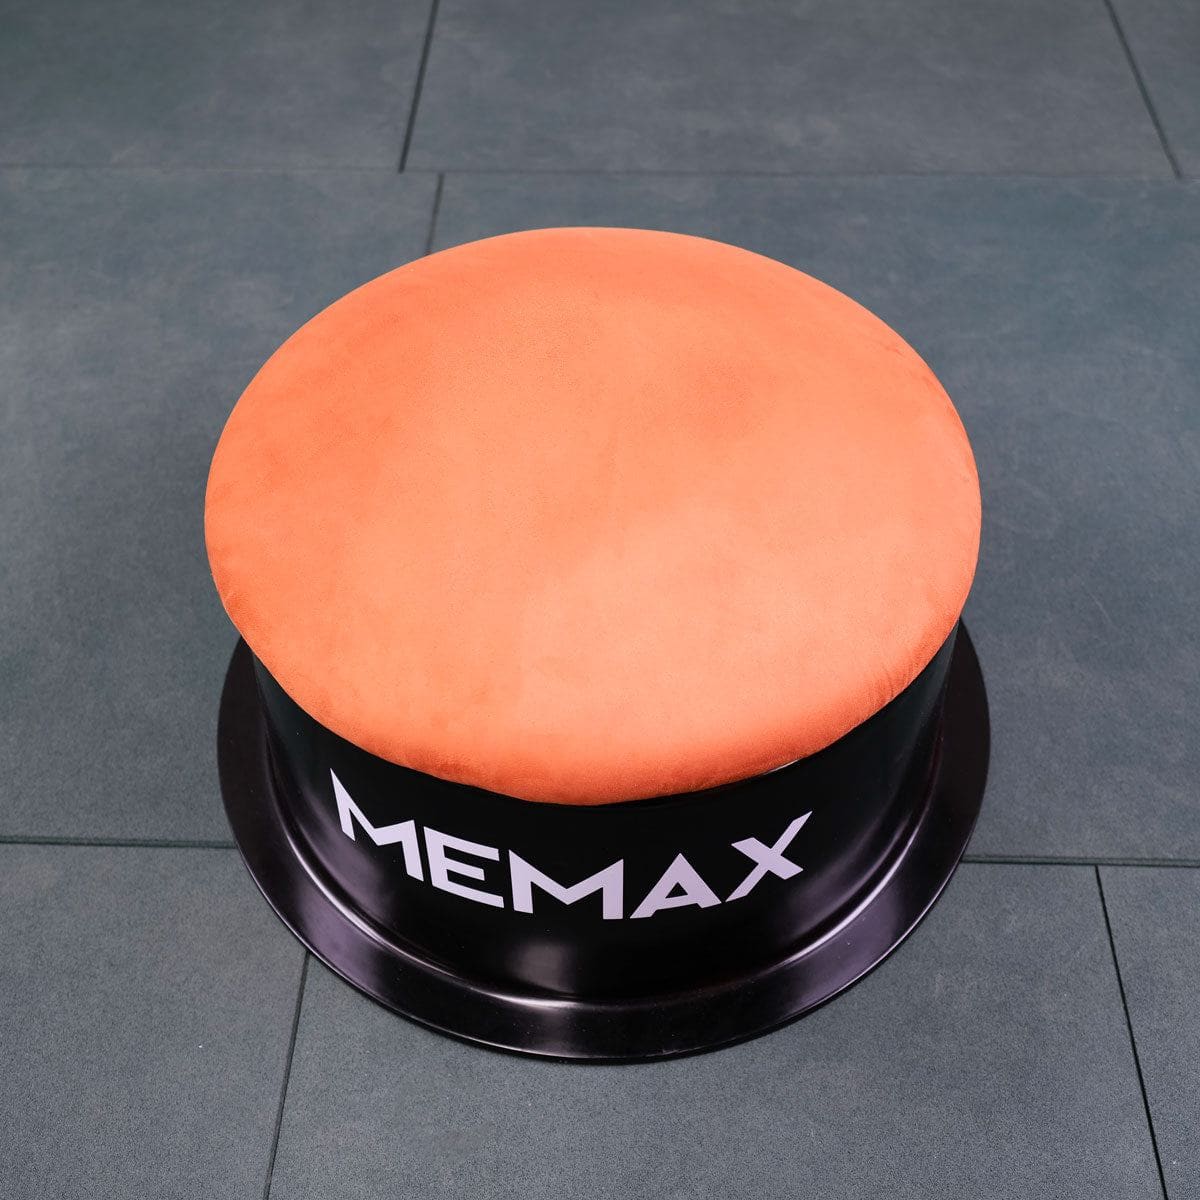 MEMAX Pommel Trainers Gymnastics Mushroom - Competition